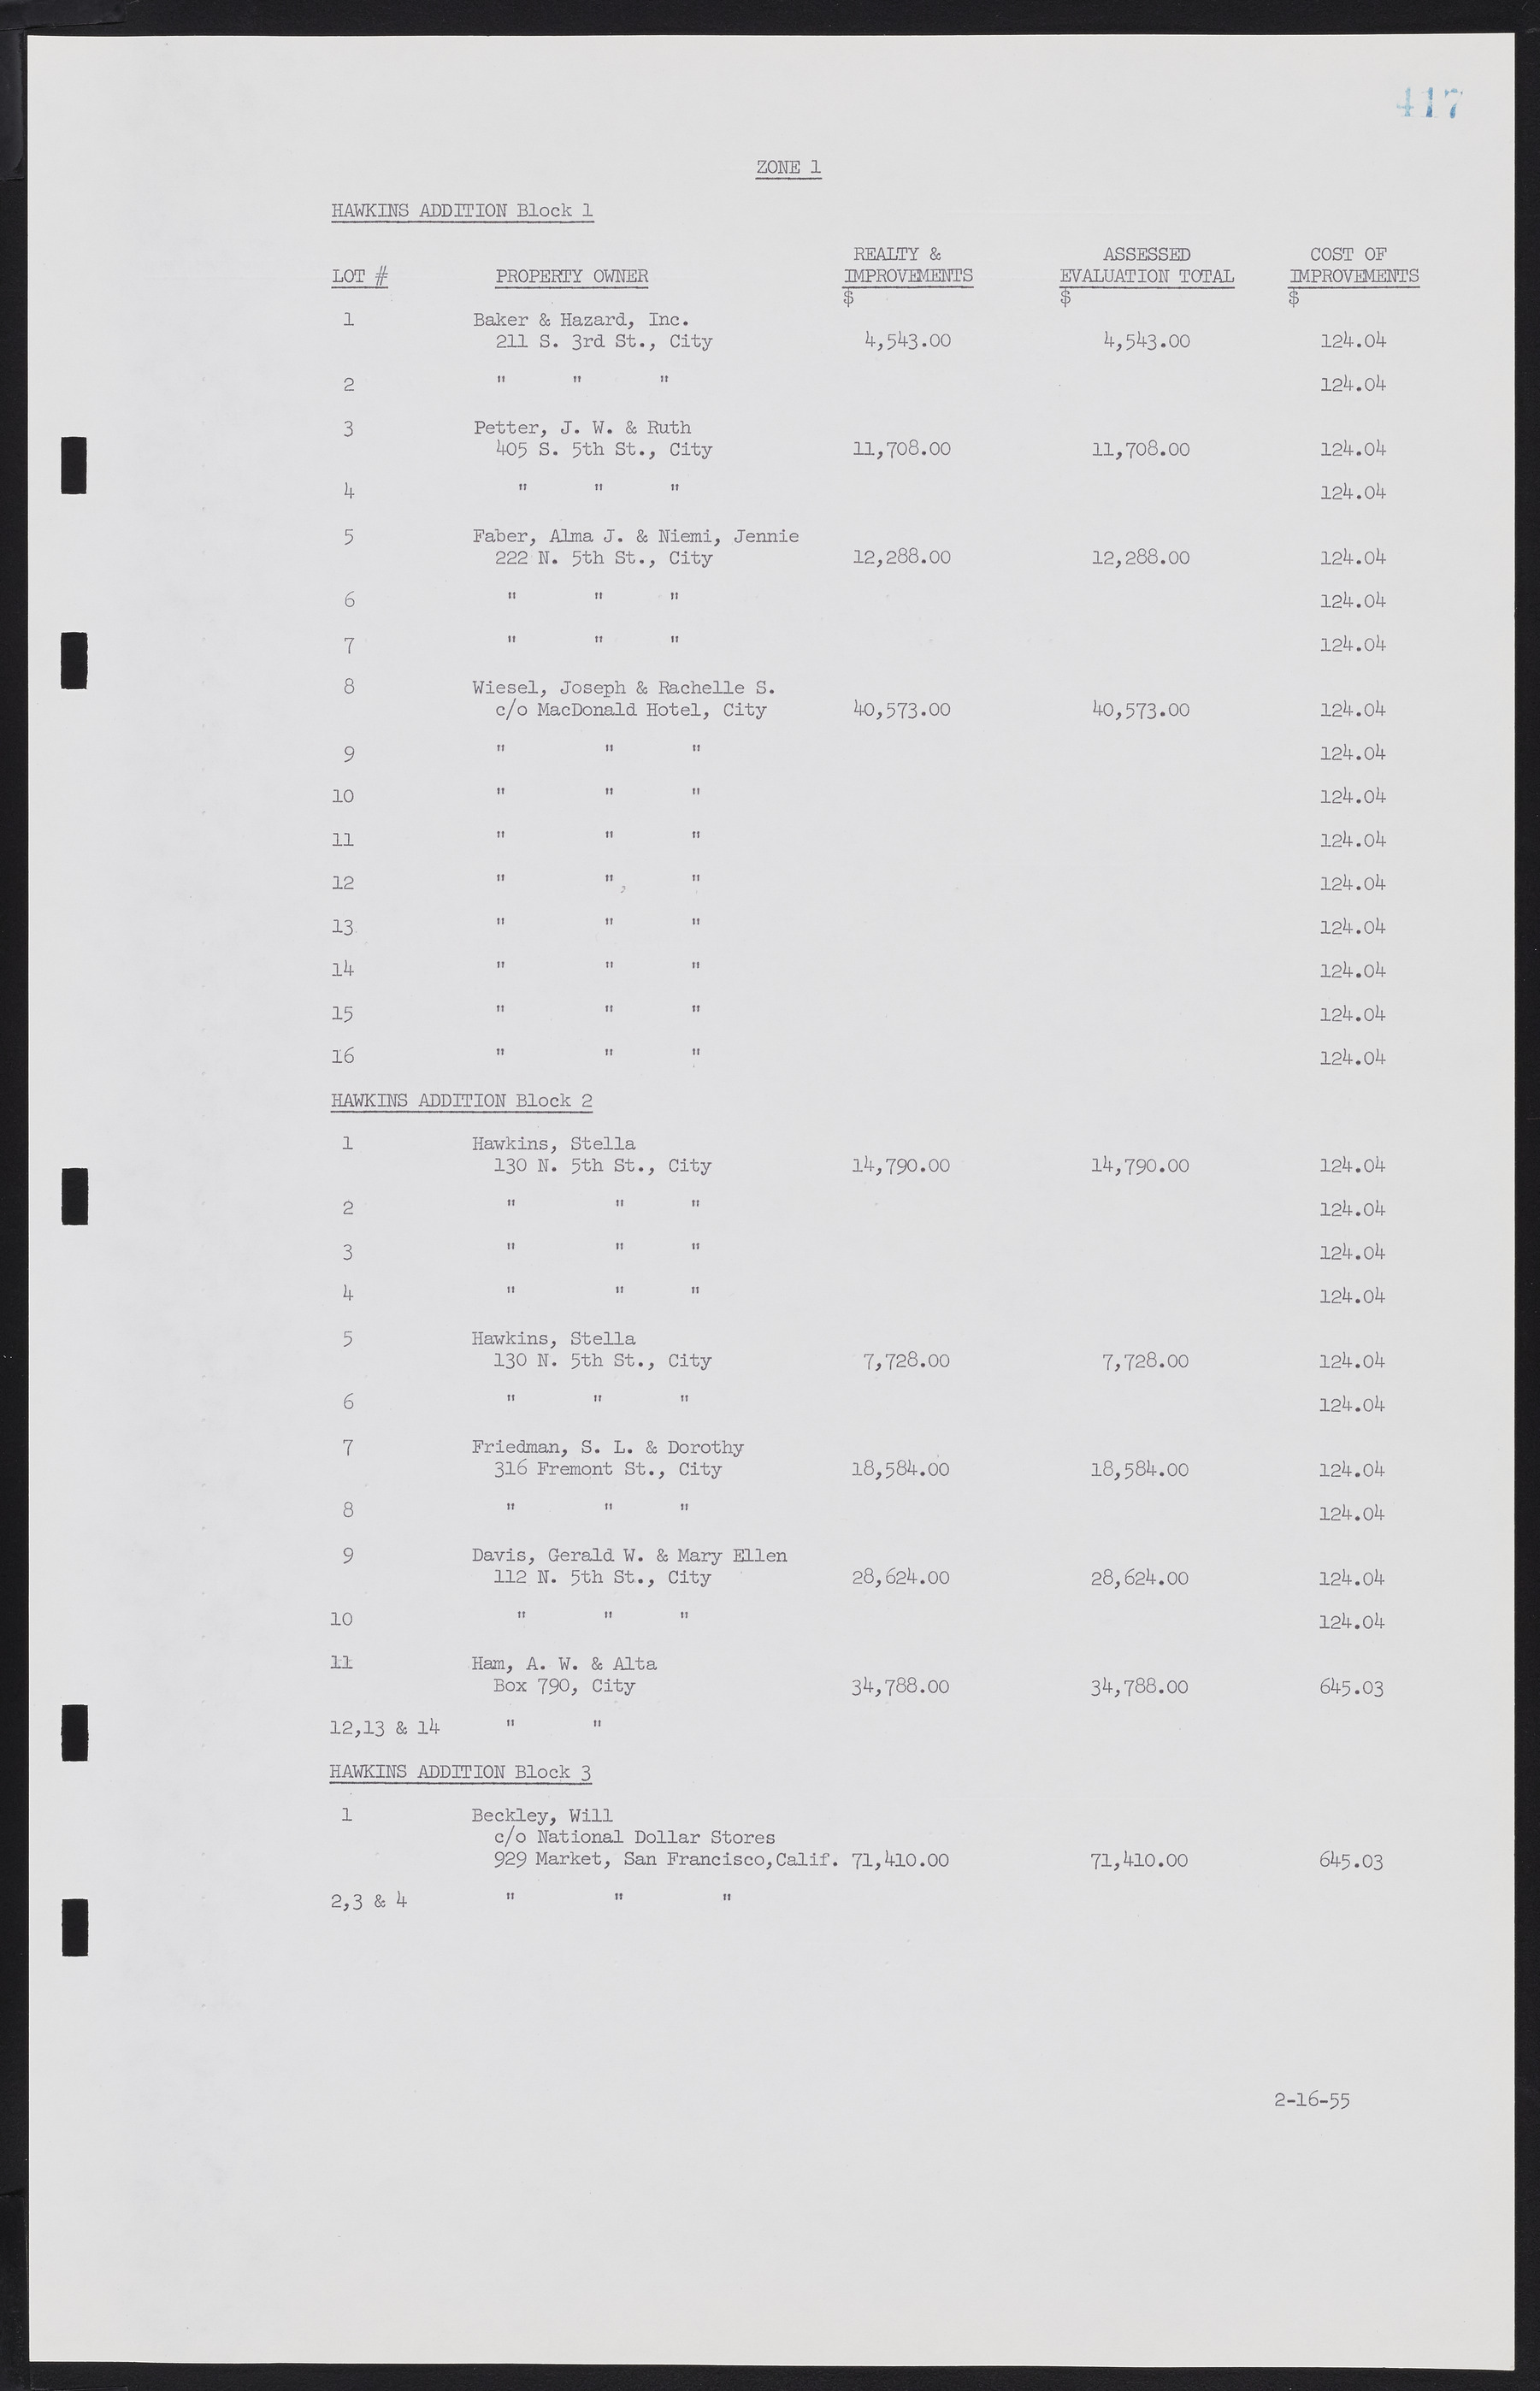 Las Vegas City Commission Minutes, February 17, 1954 to September 21, 1955, lvc000009-423